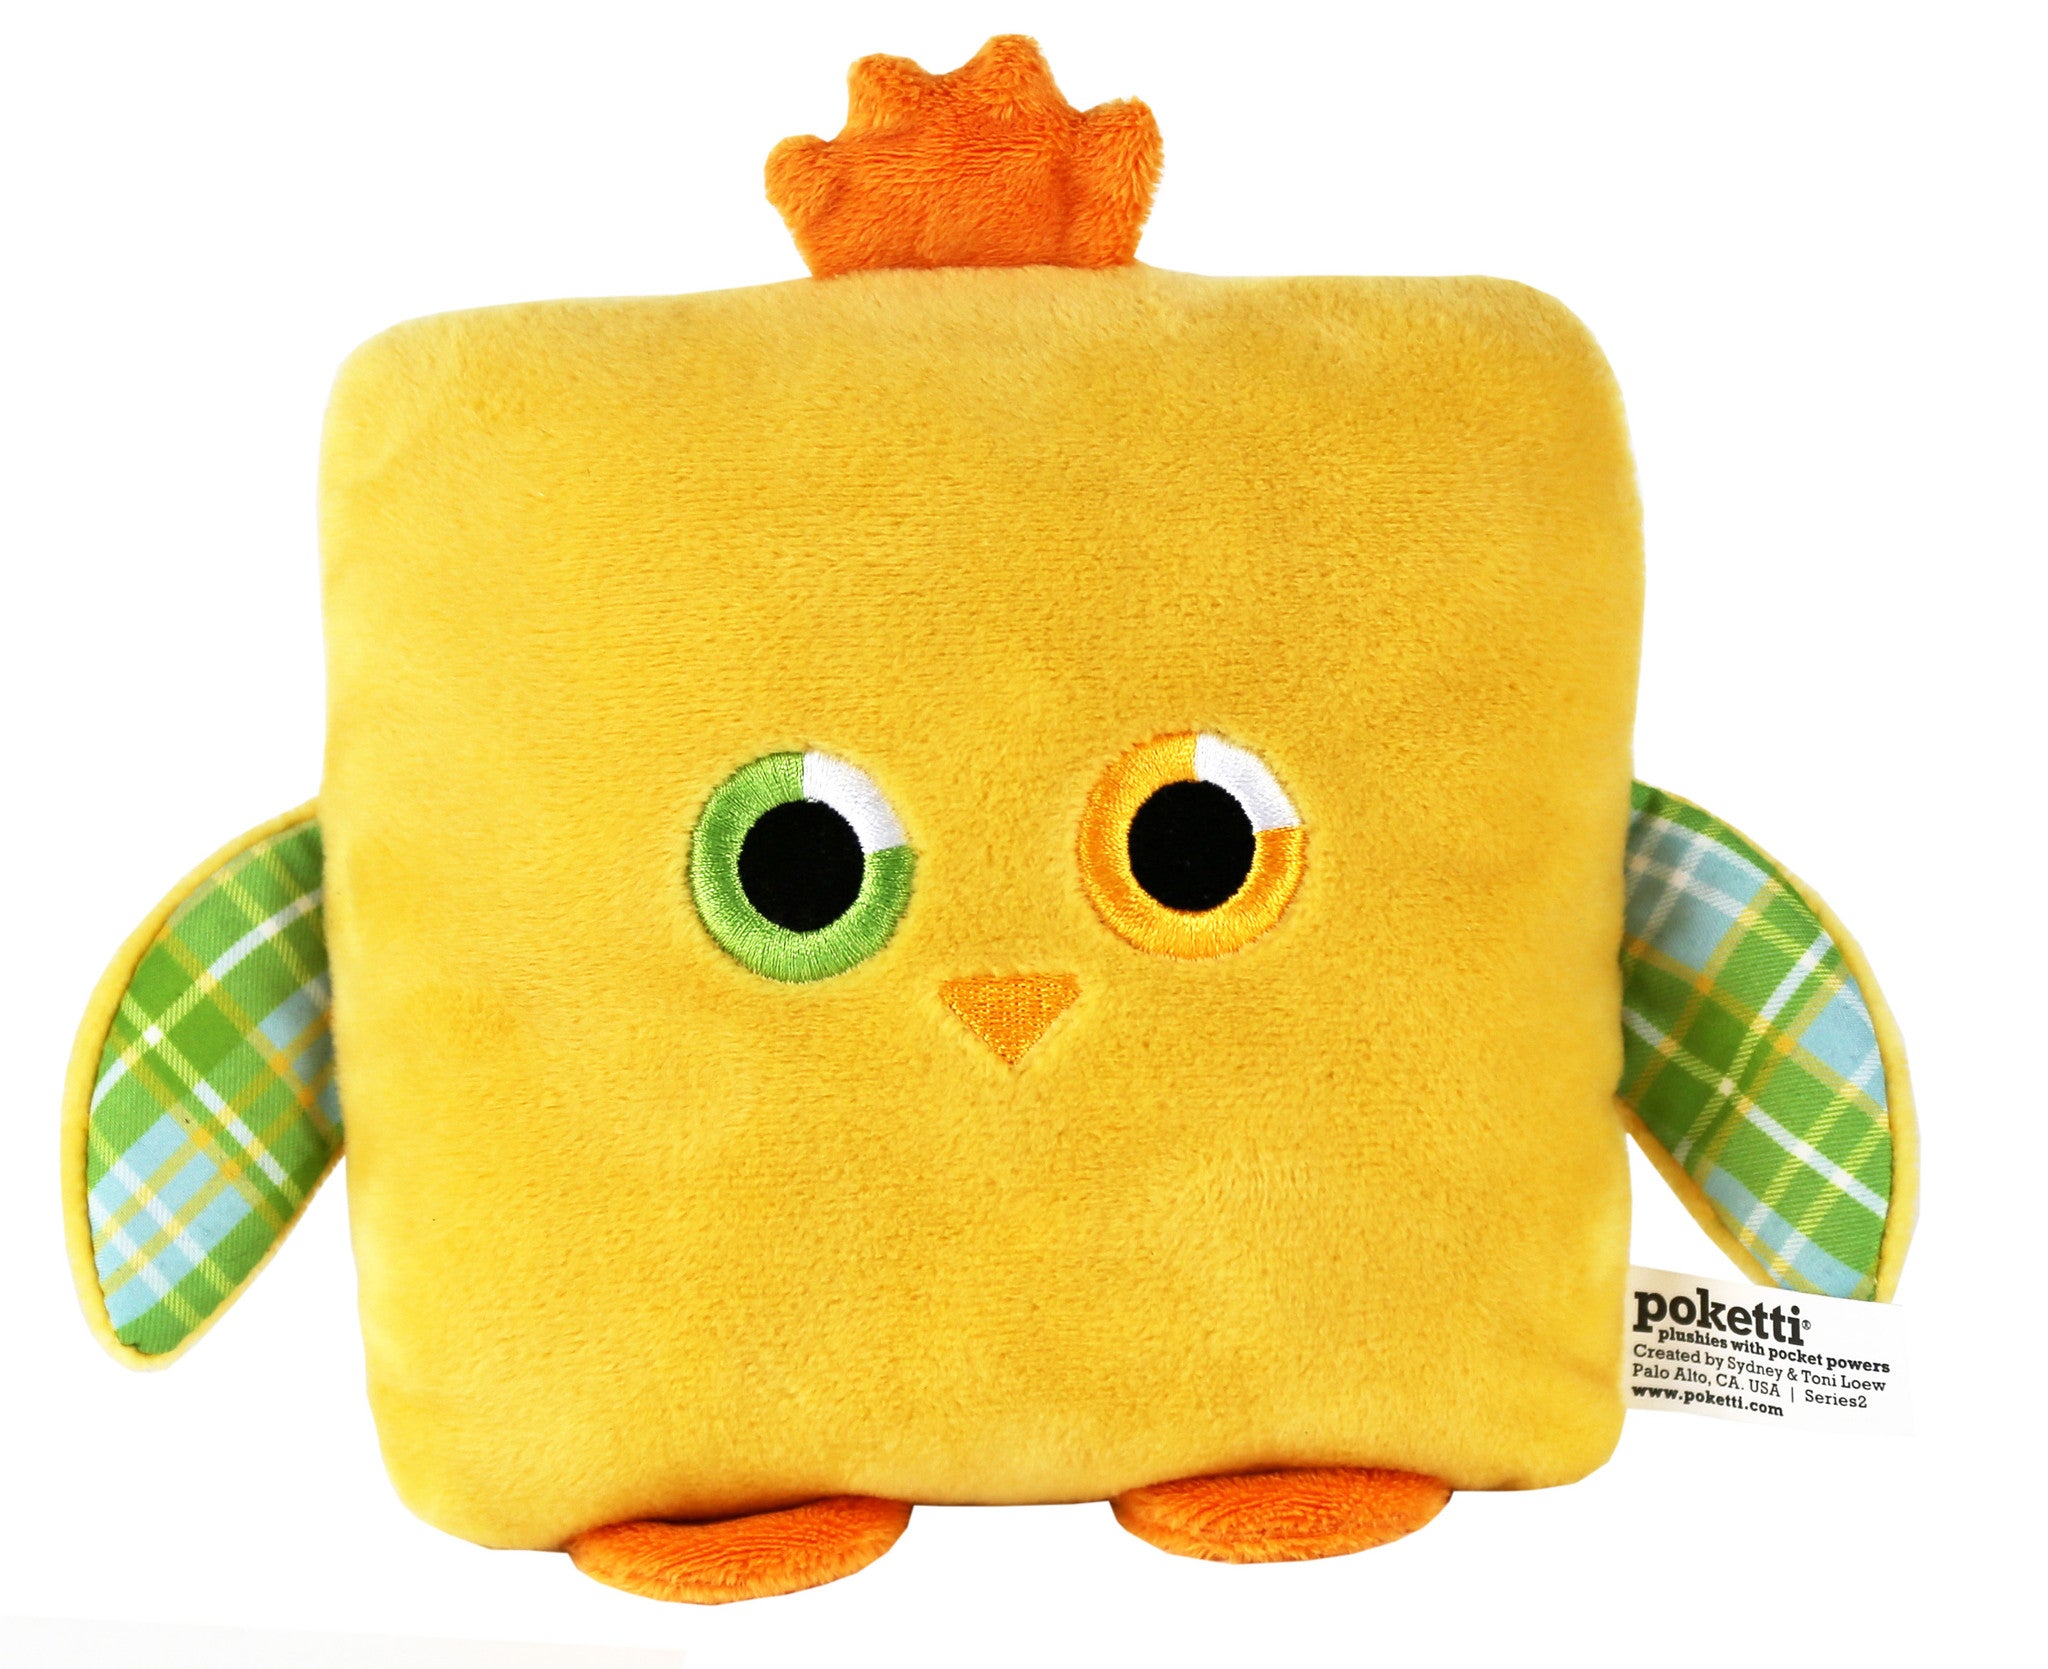 Plush toy chick stuffed animal bird with a useful back pocket